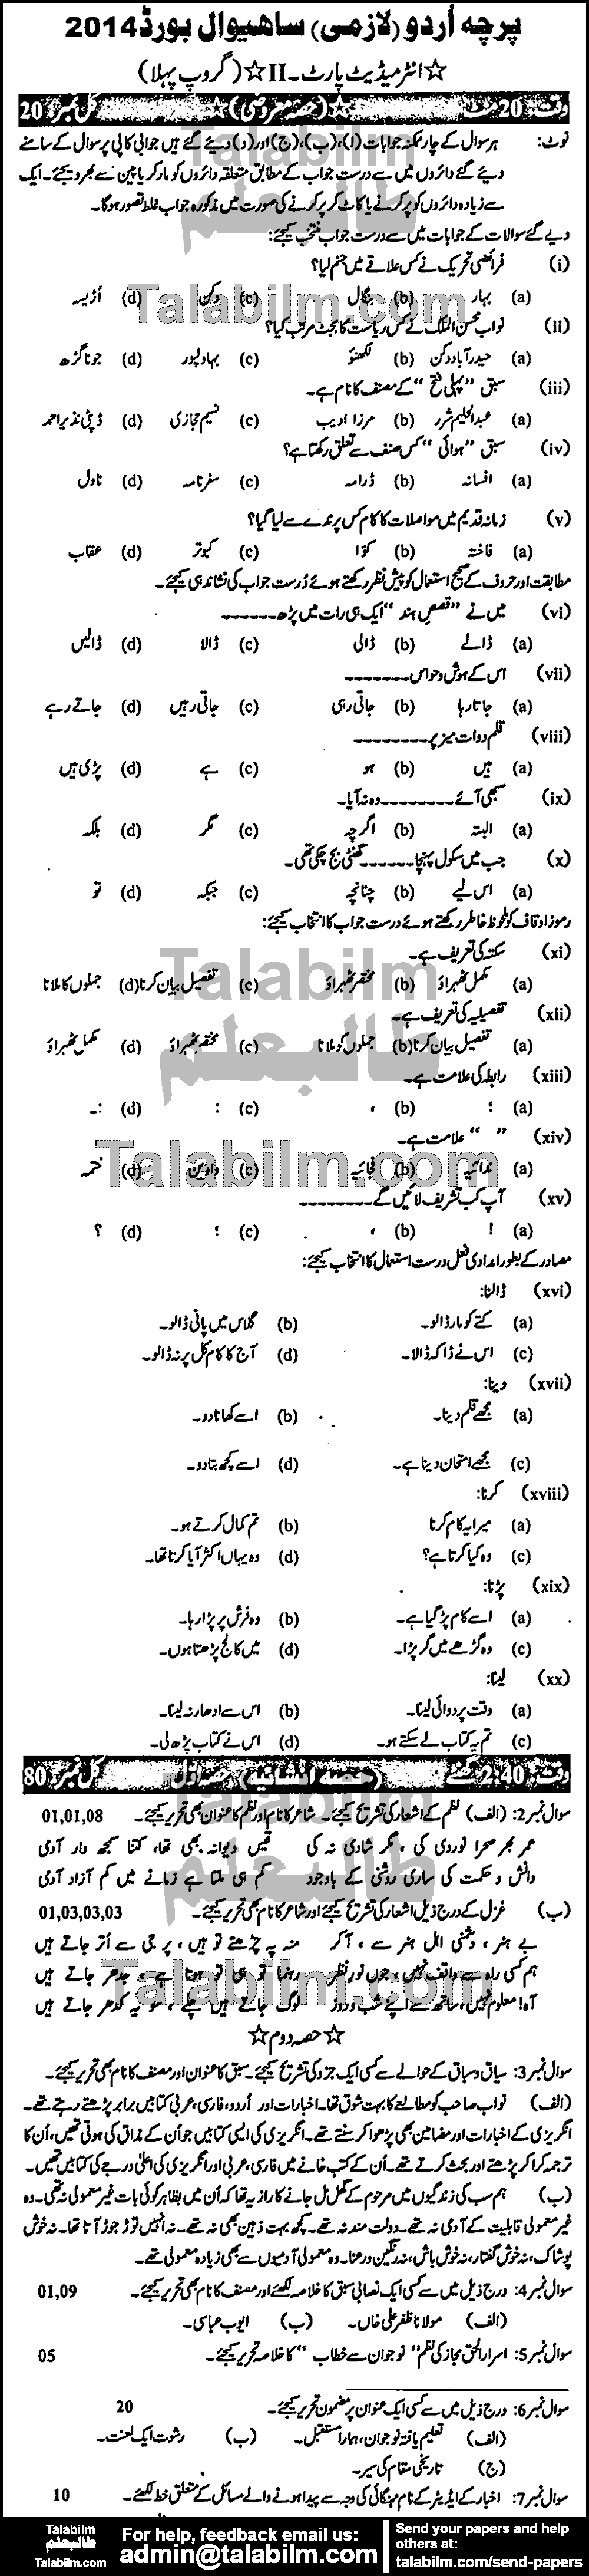 Urdu 0 past paper for Group-I 2014